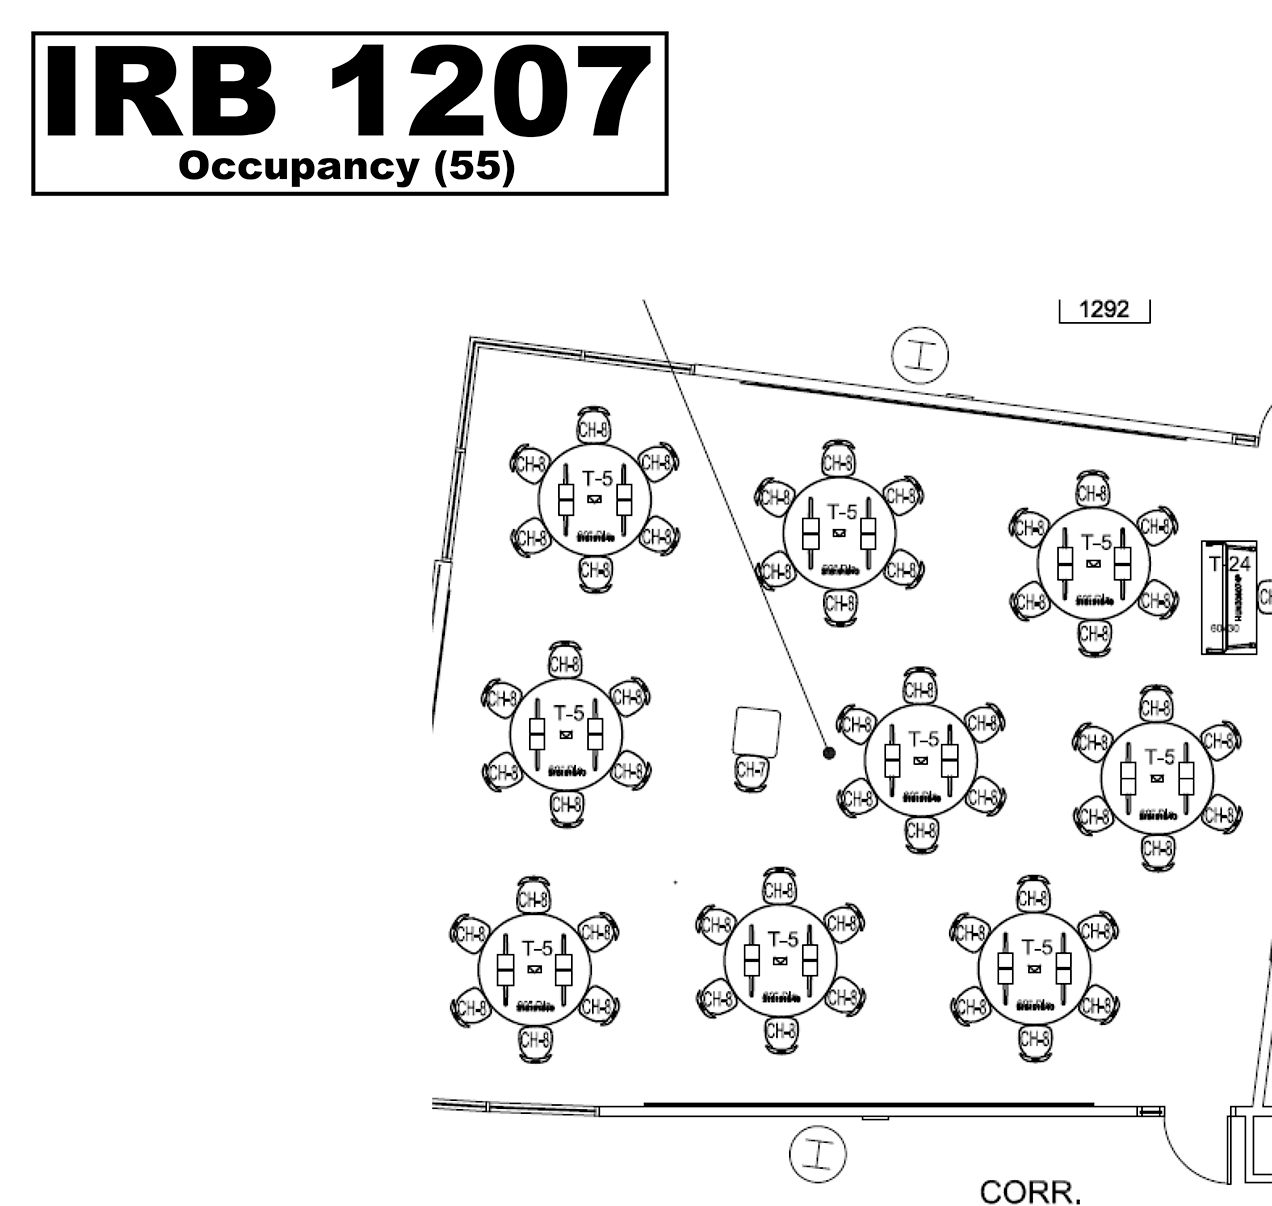 IRB1207 floorplan